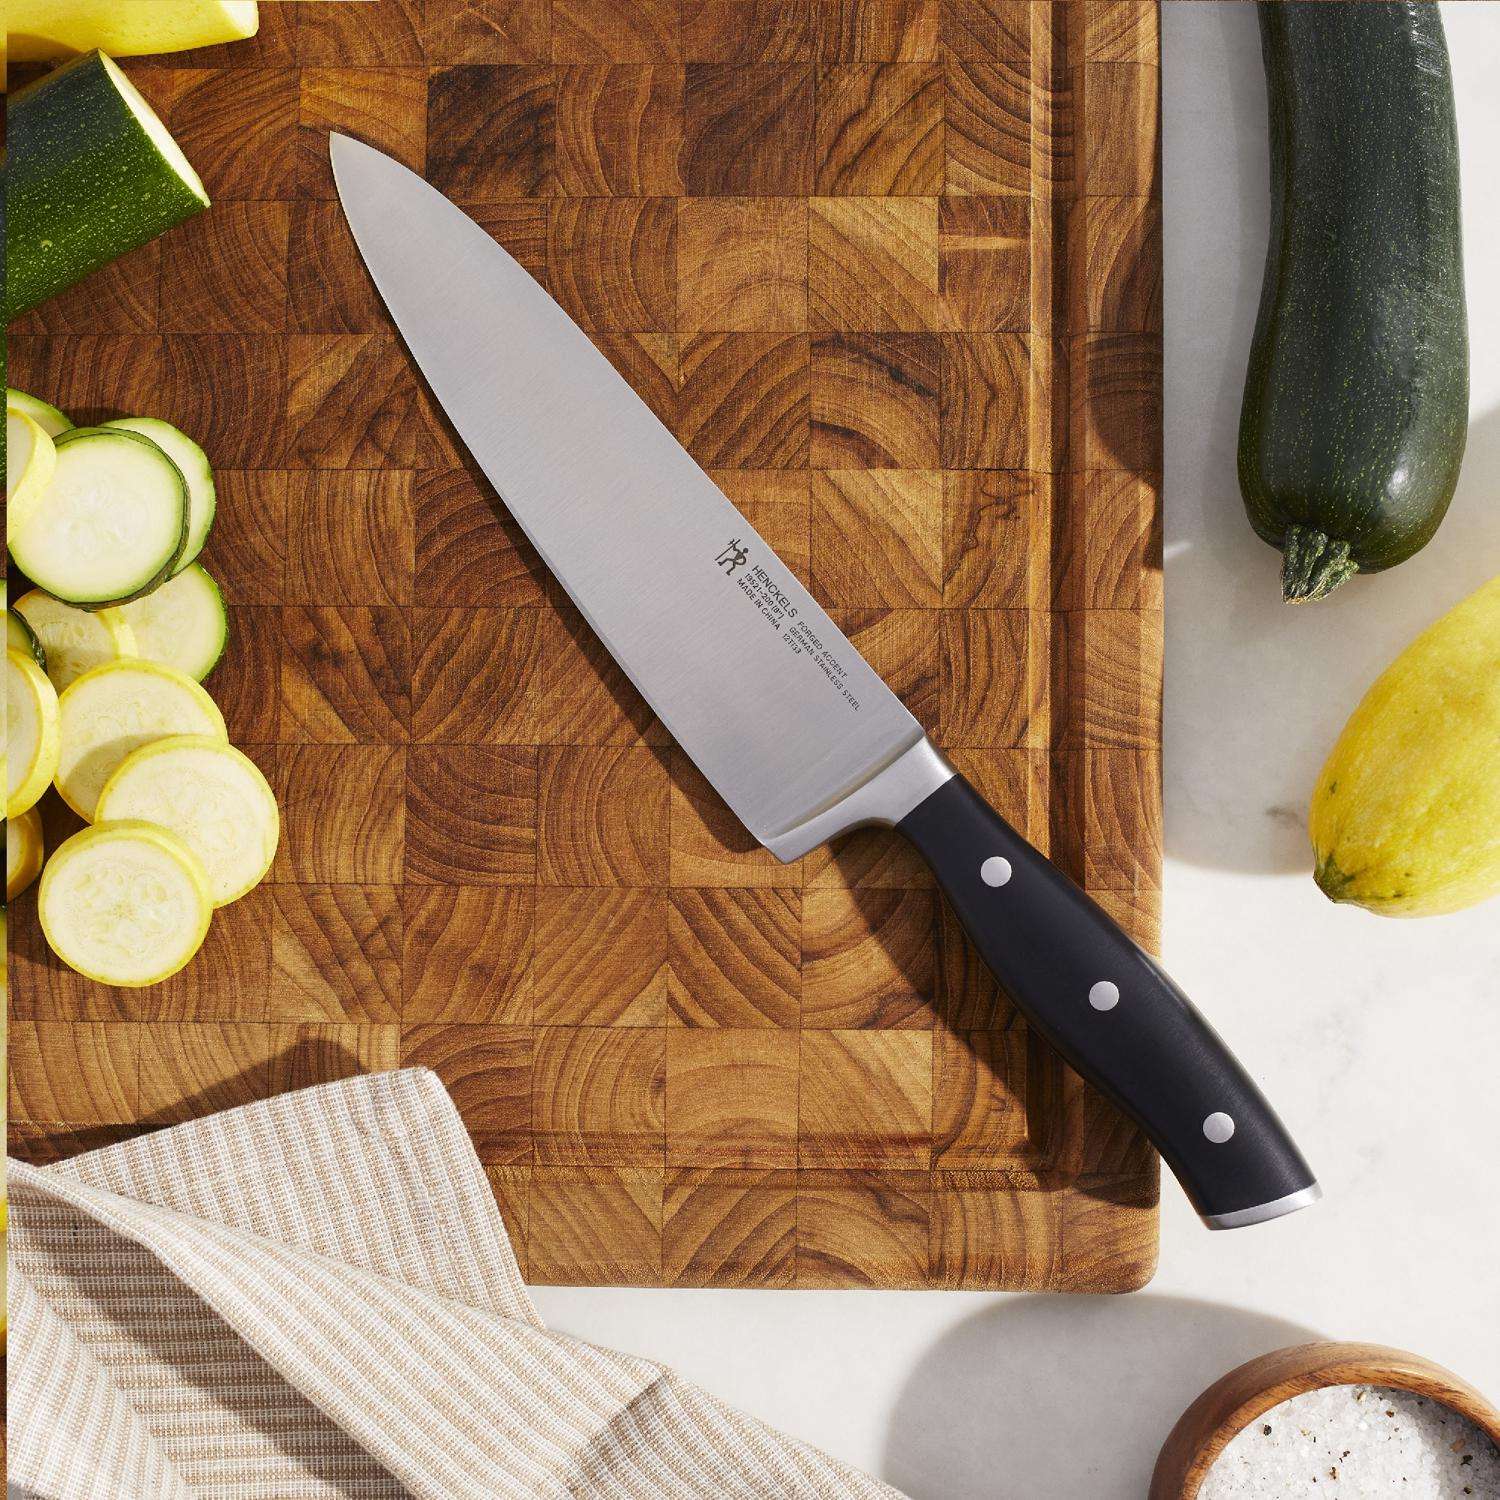 J.A. Henckels Forged Premio 8 Chef's Knife